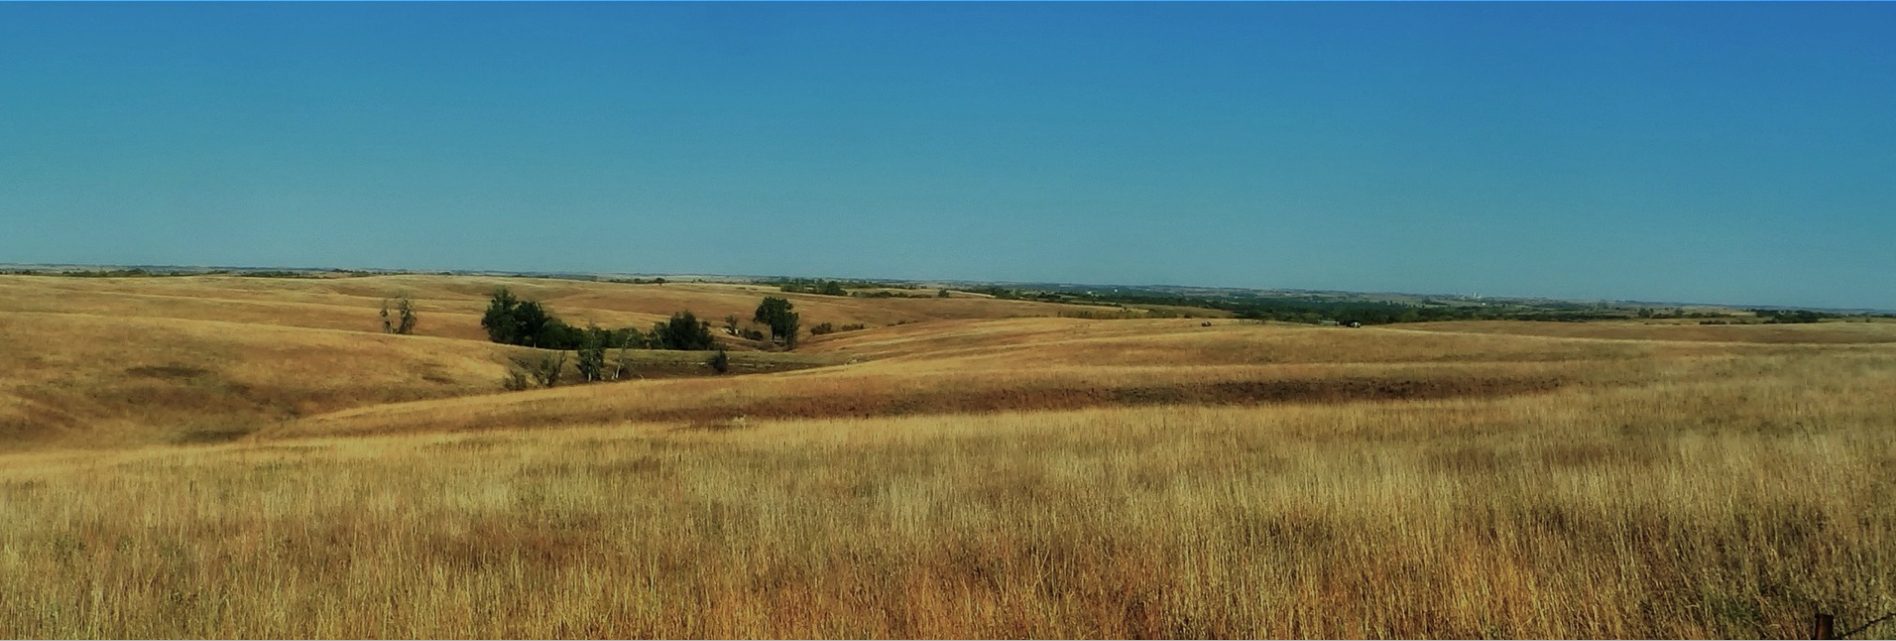 Land for Sale in Nebraska by Lashley Land